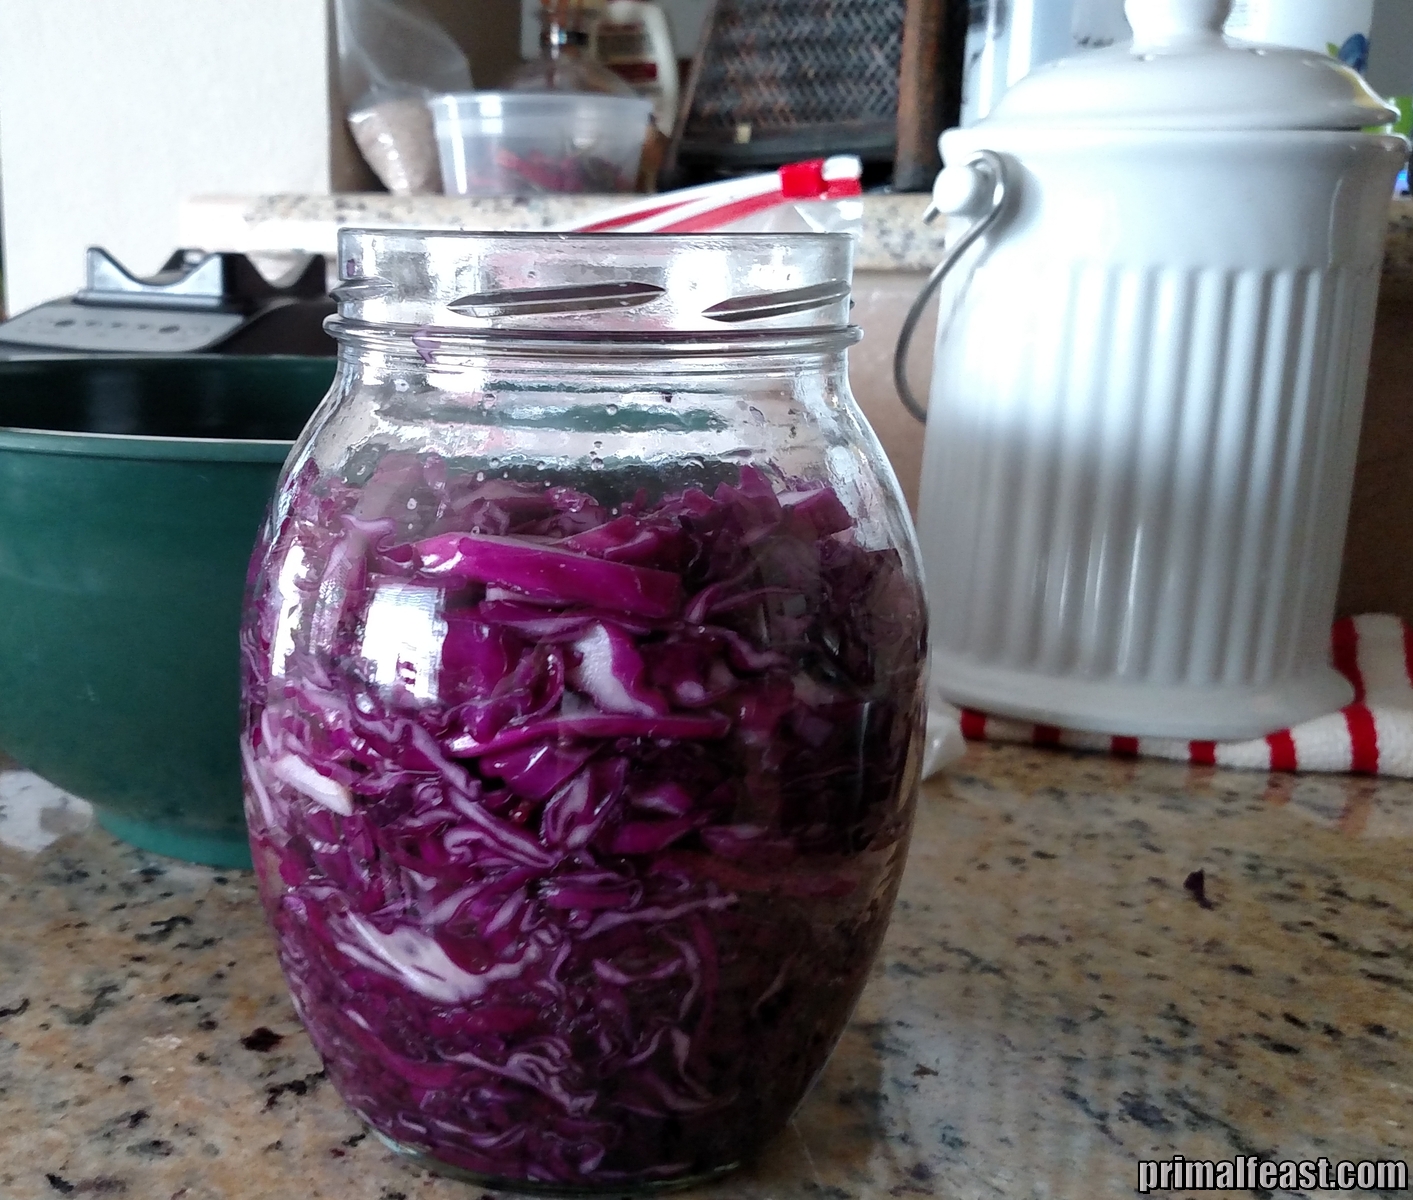 2015-0919-homemade-sauerkraut-003-pf.jpg